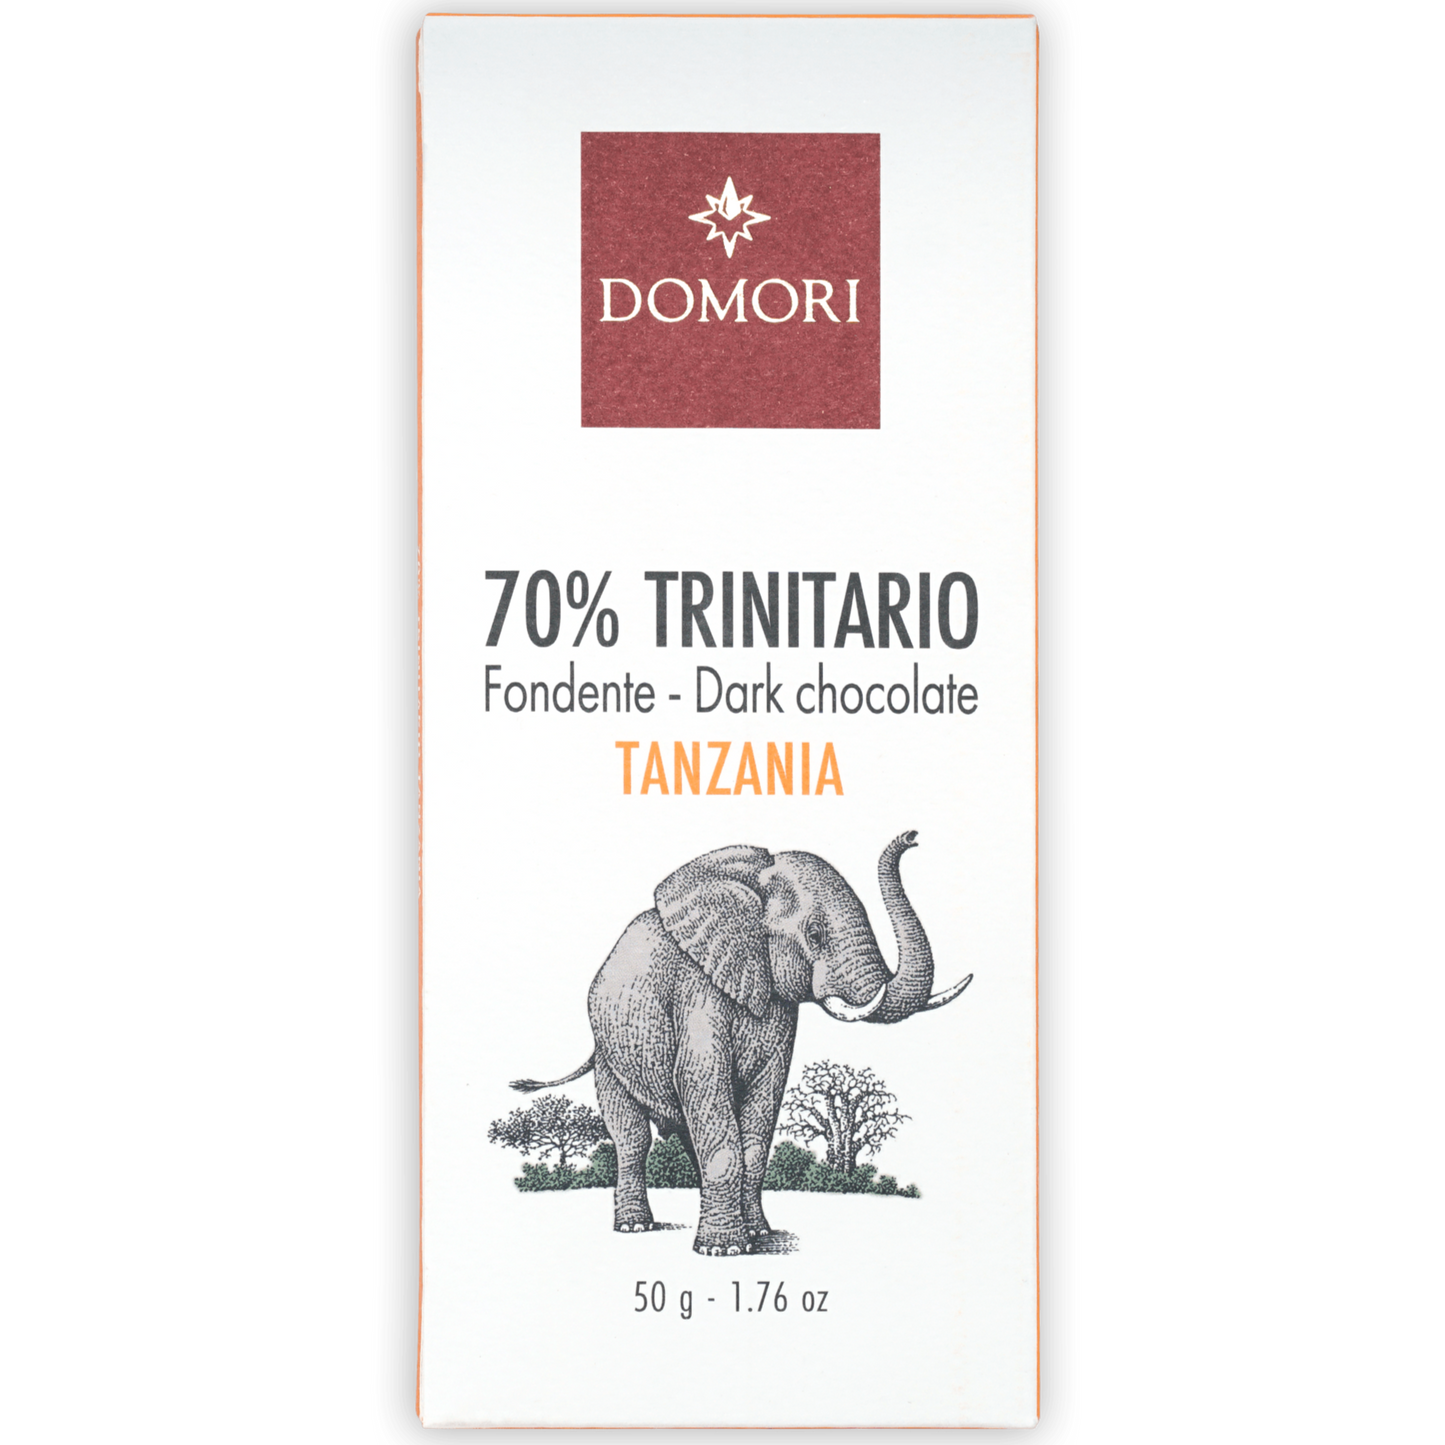 Domori Trinitario Tanzania 70%